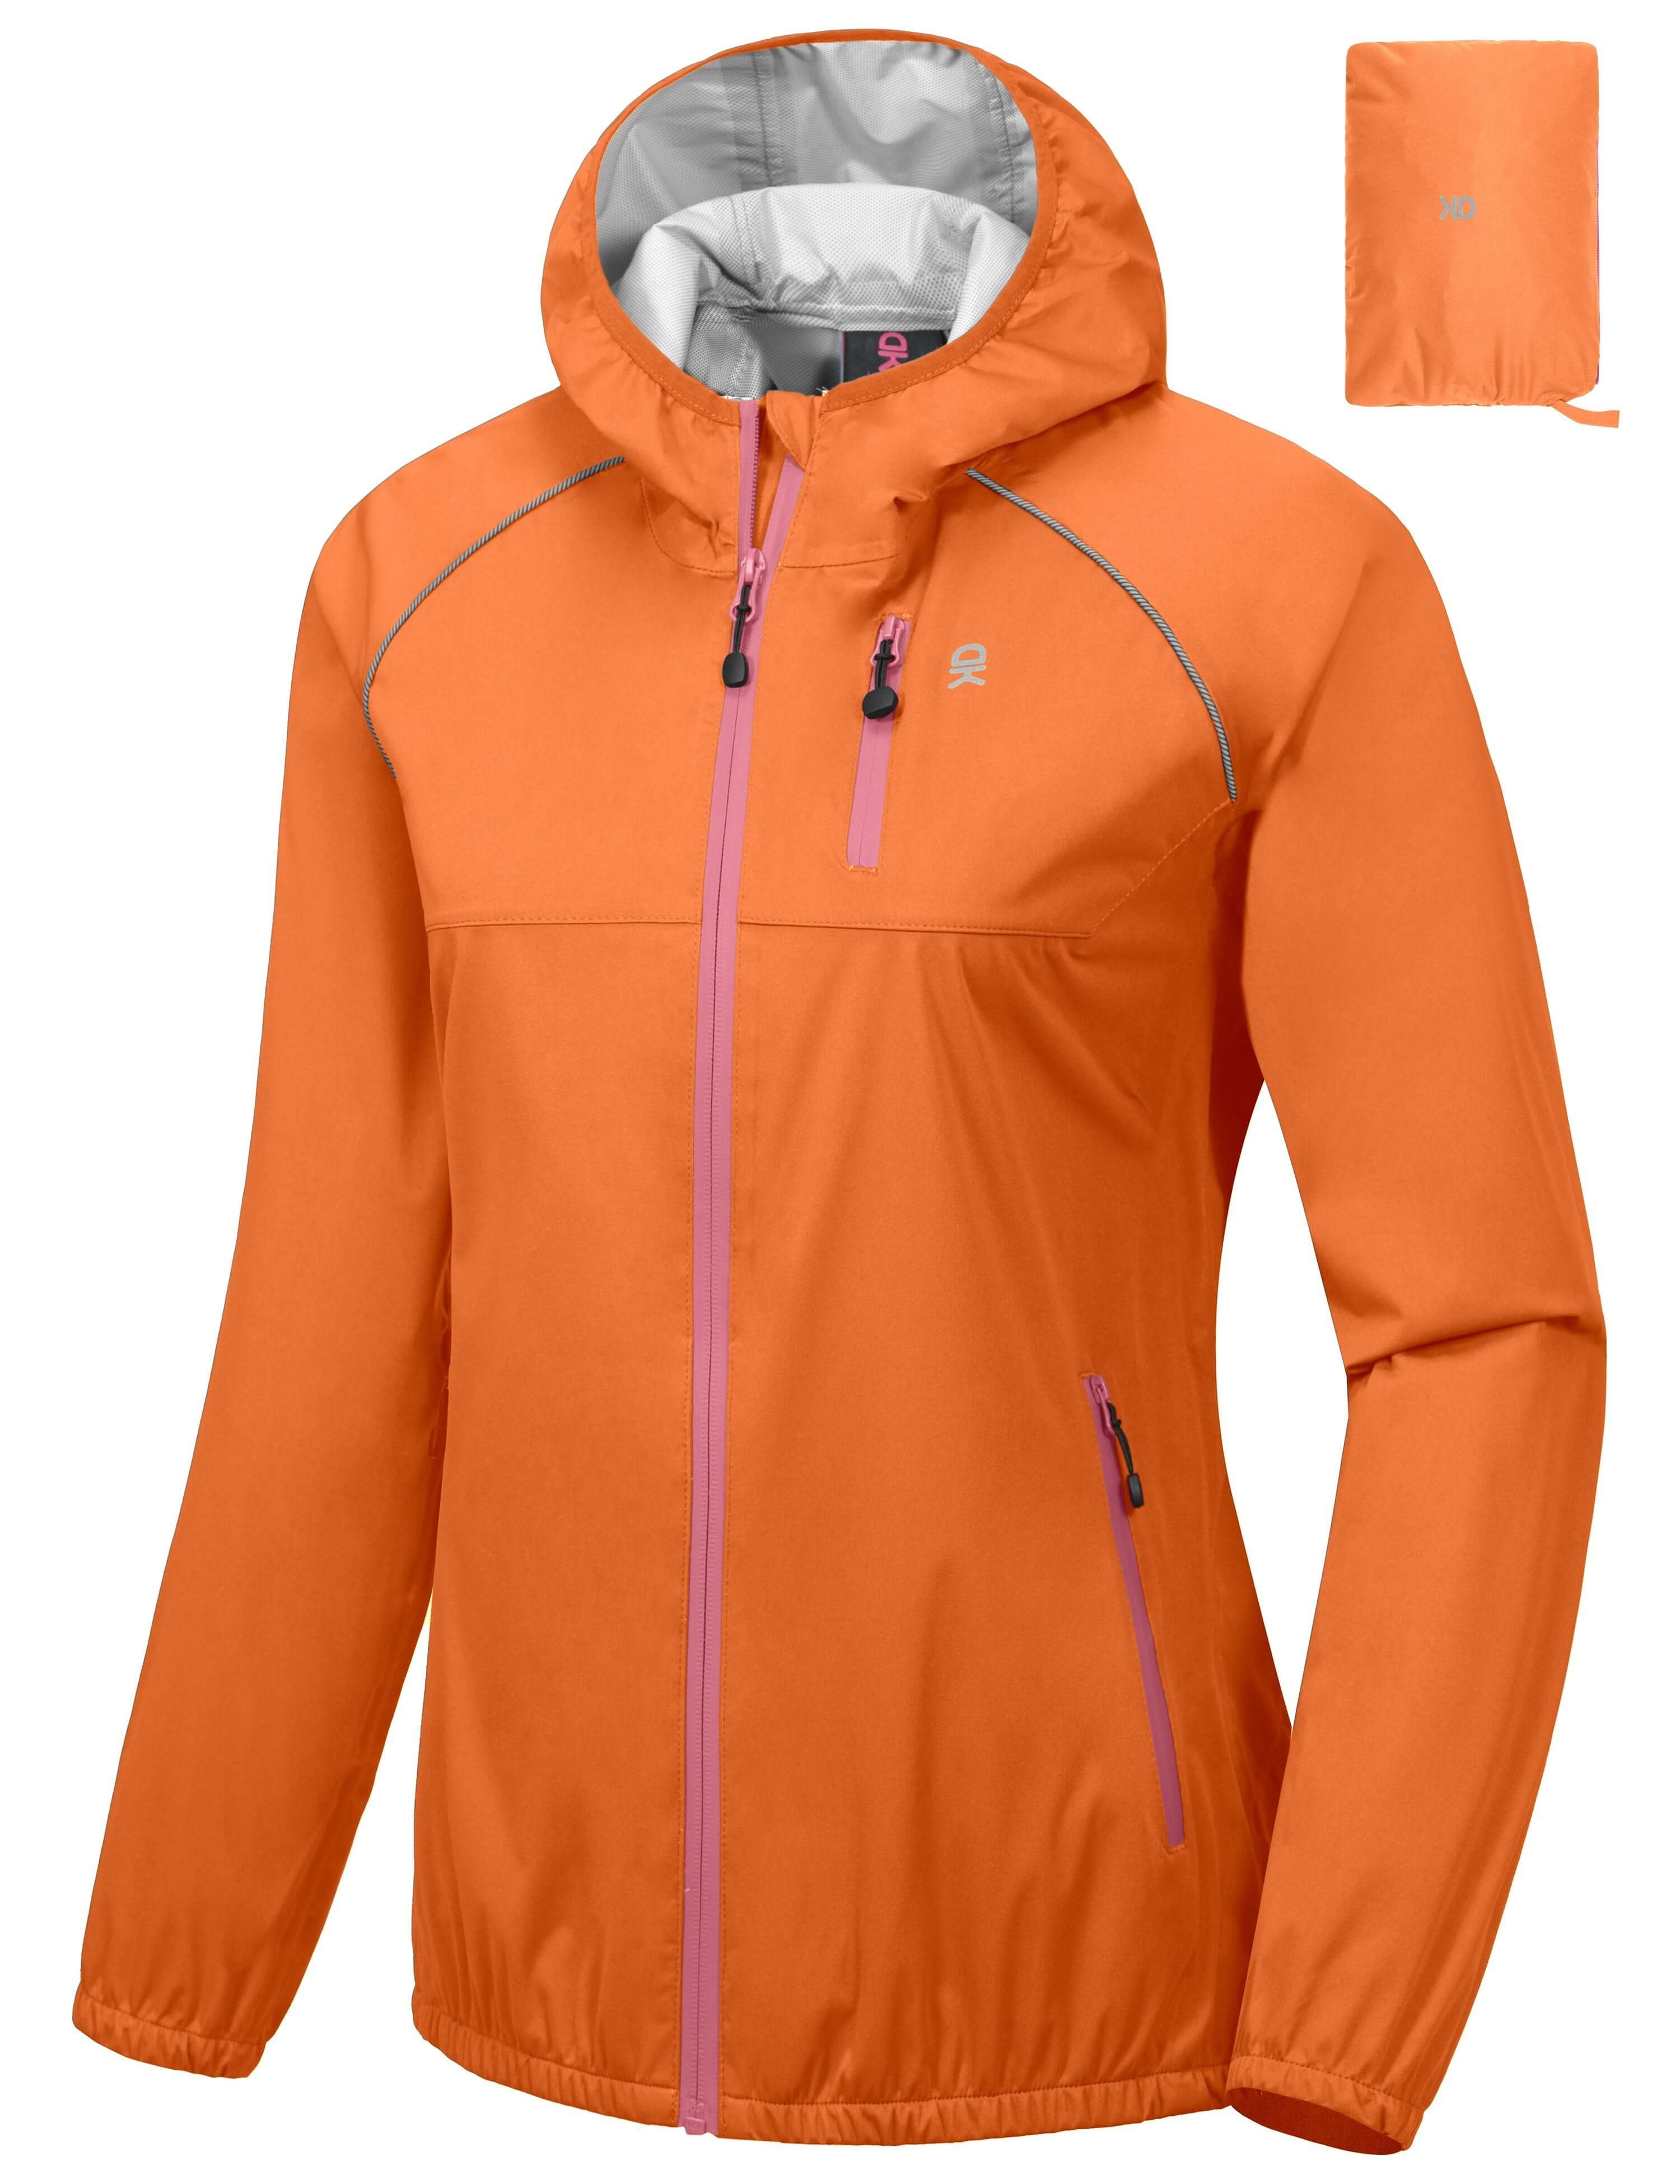 waterproof removable sleeve jacket | Zero Restriction